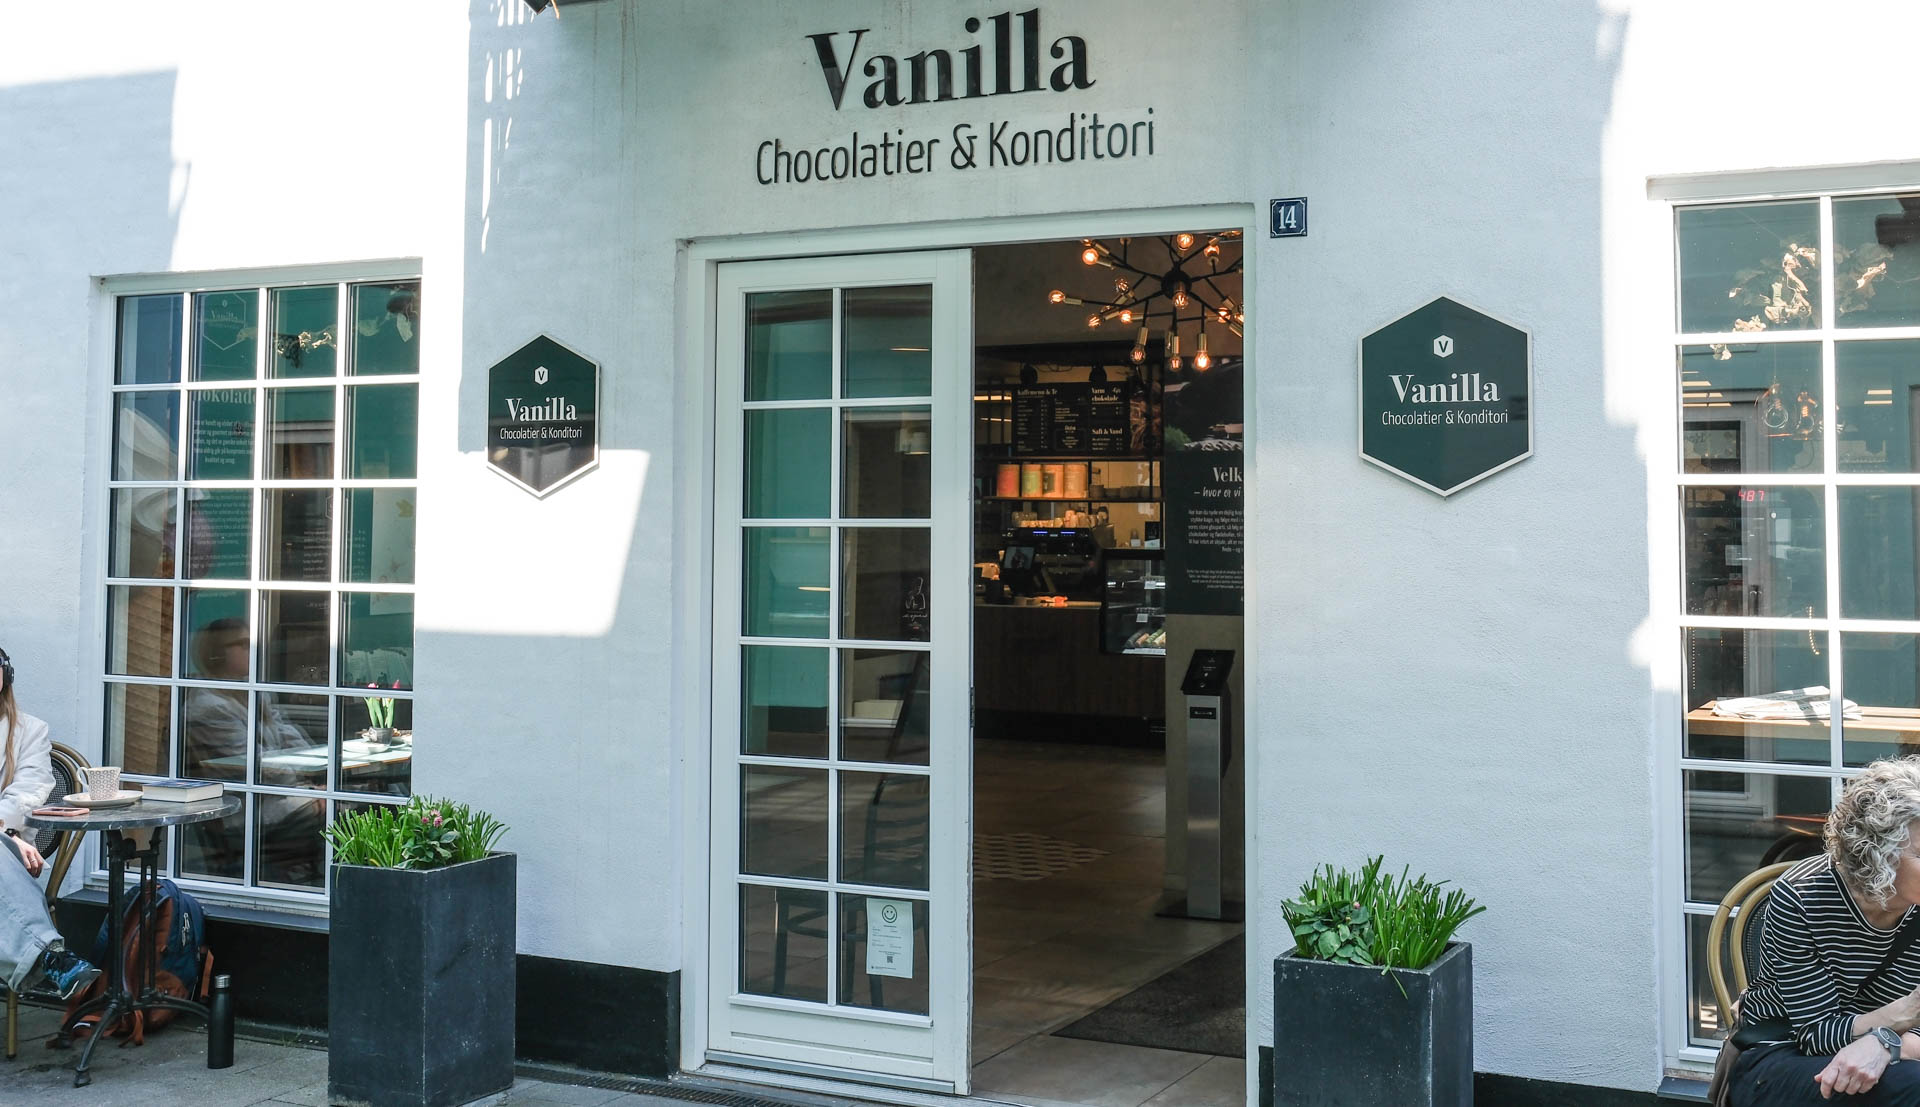 Indgangen til Vanilla Chocolatier & Konditori i Paladspassagen i Vejle